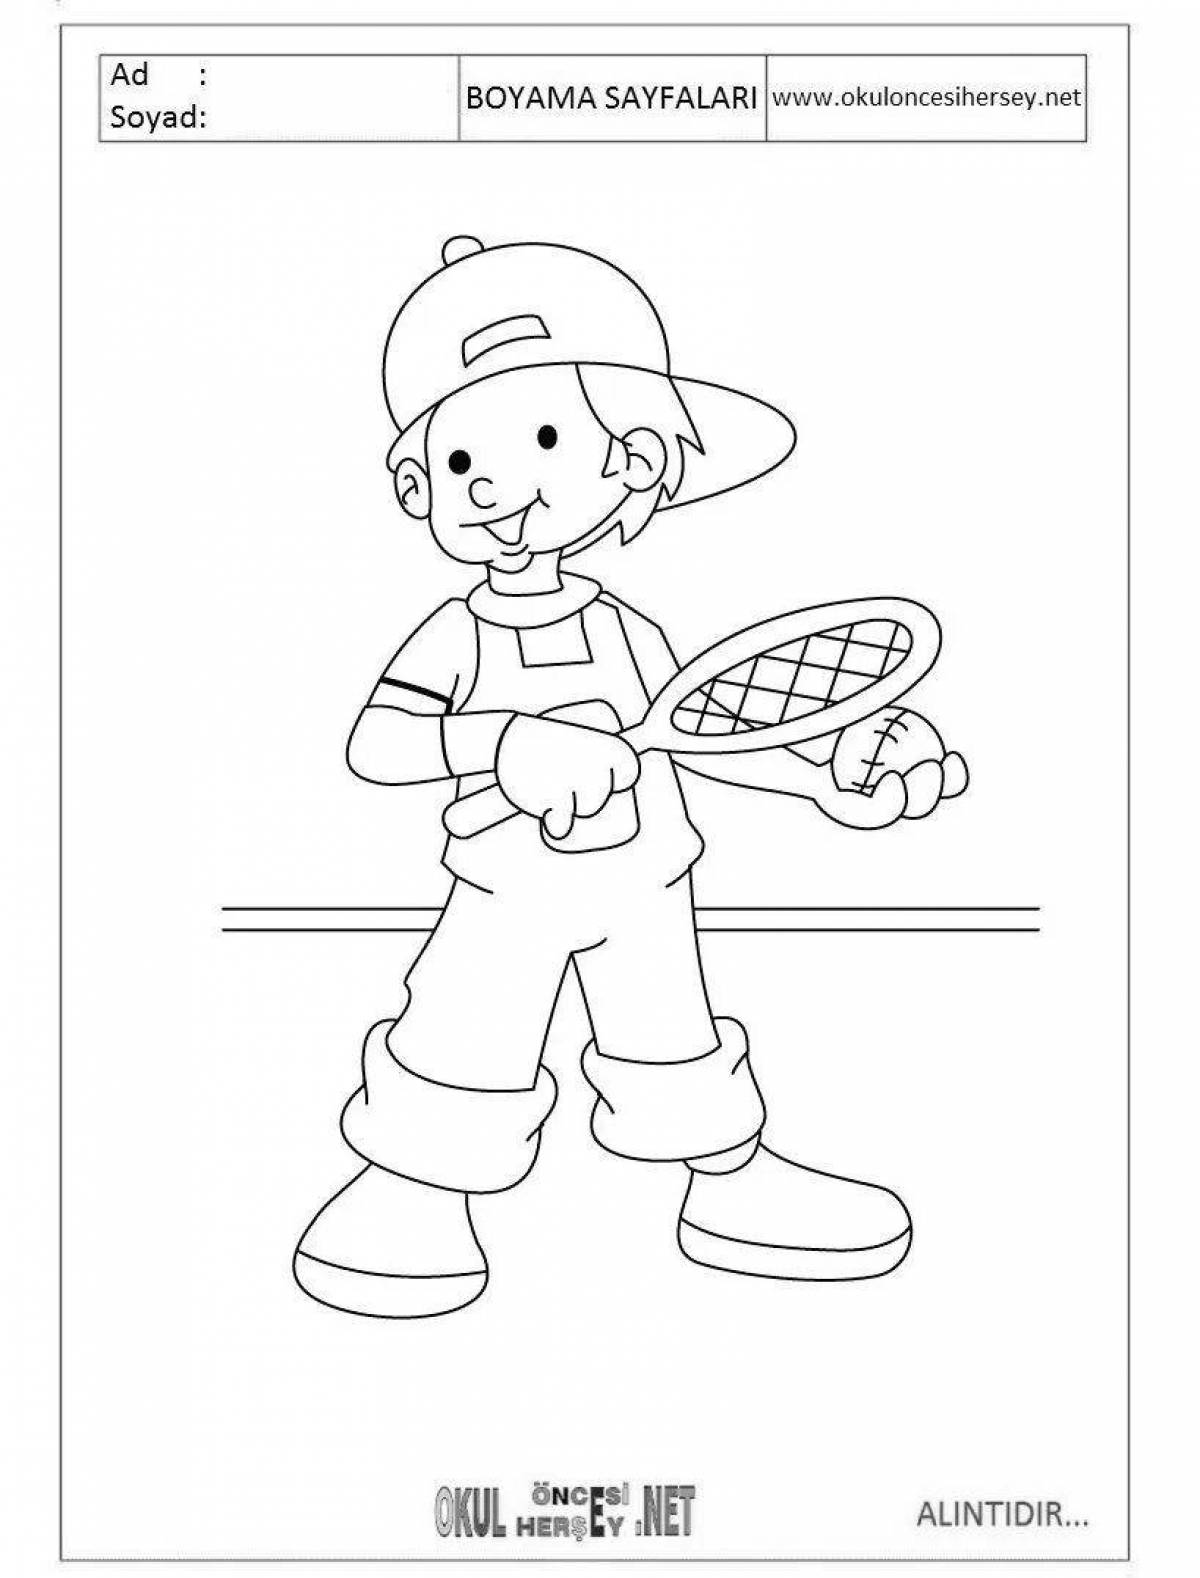 Fun sports coloring book for preschoolers